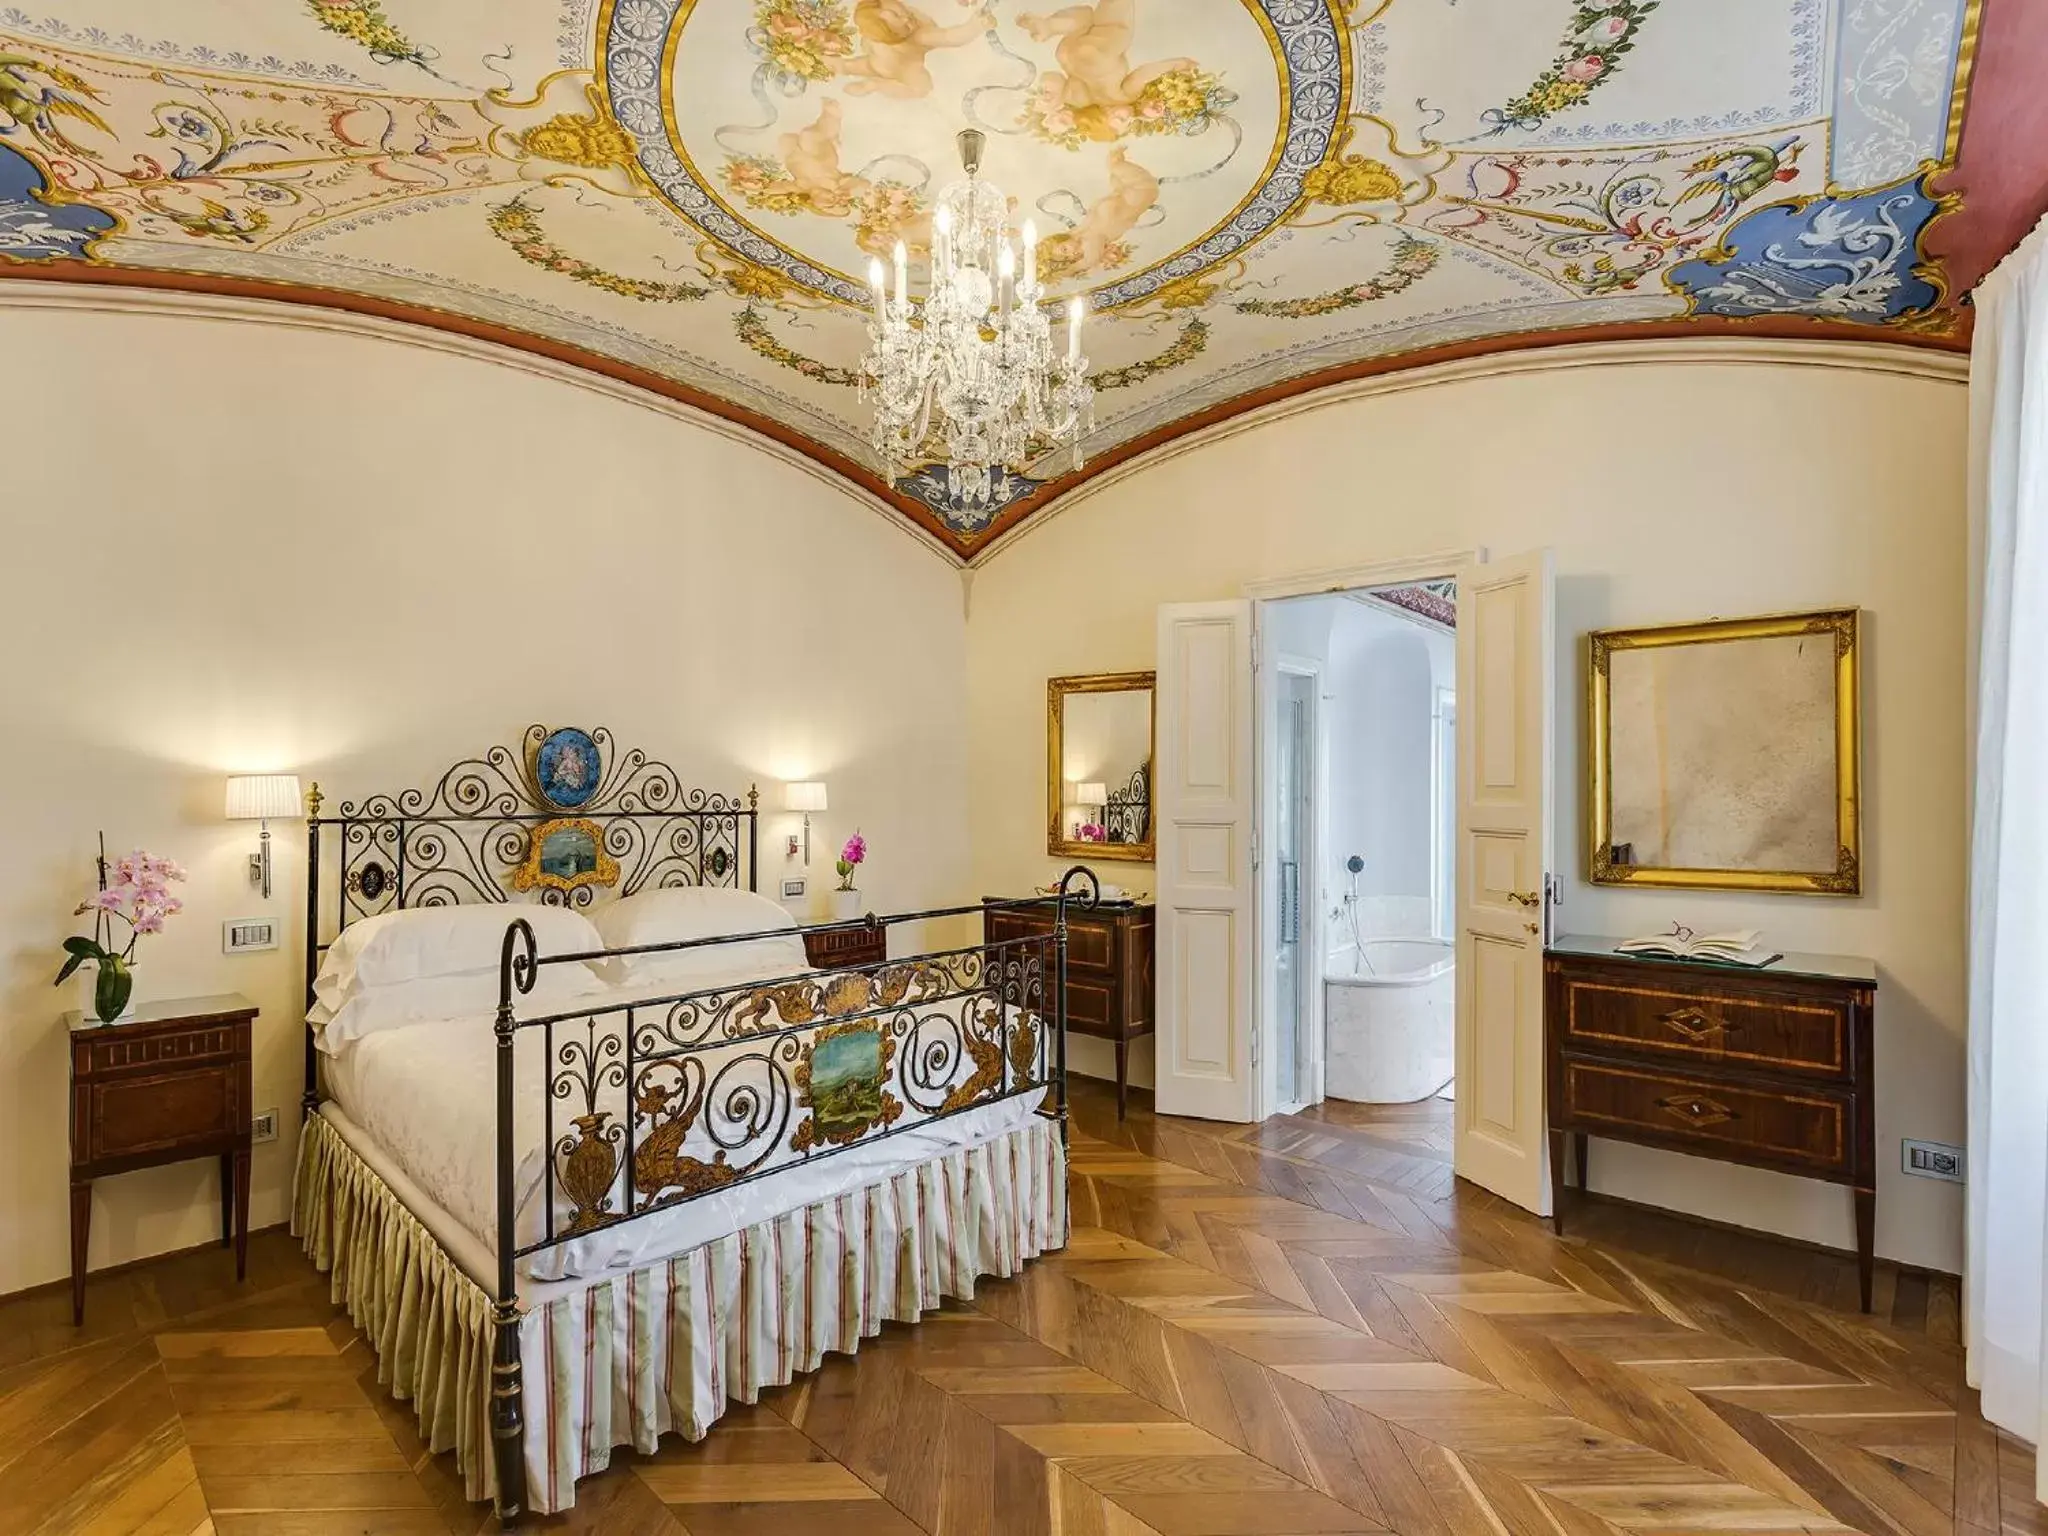 Bed, Room Photo in Relais degli Angeli Residenza d'Epoca